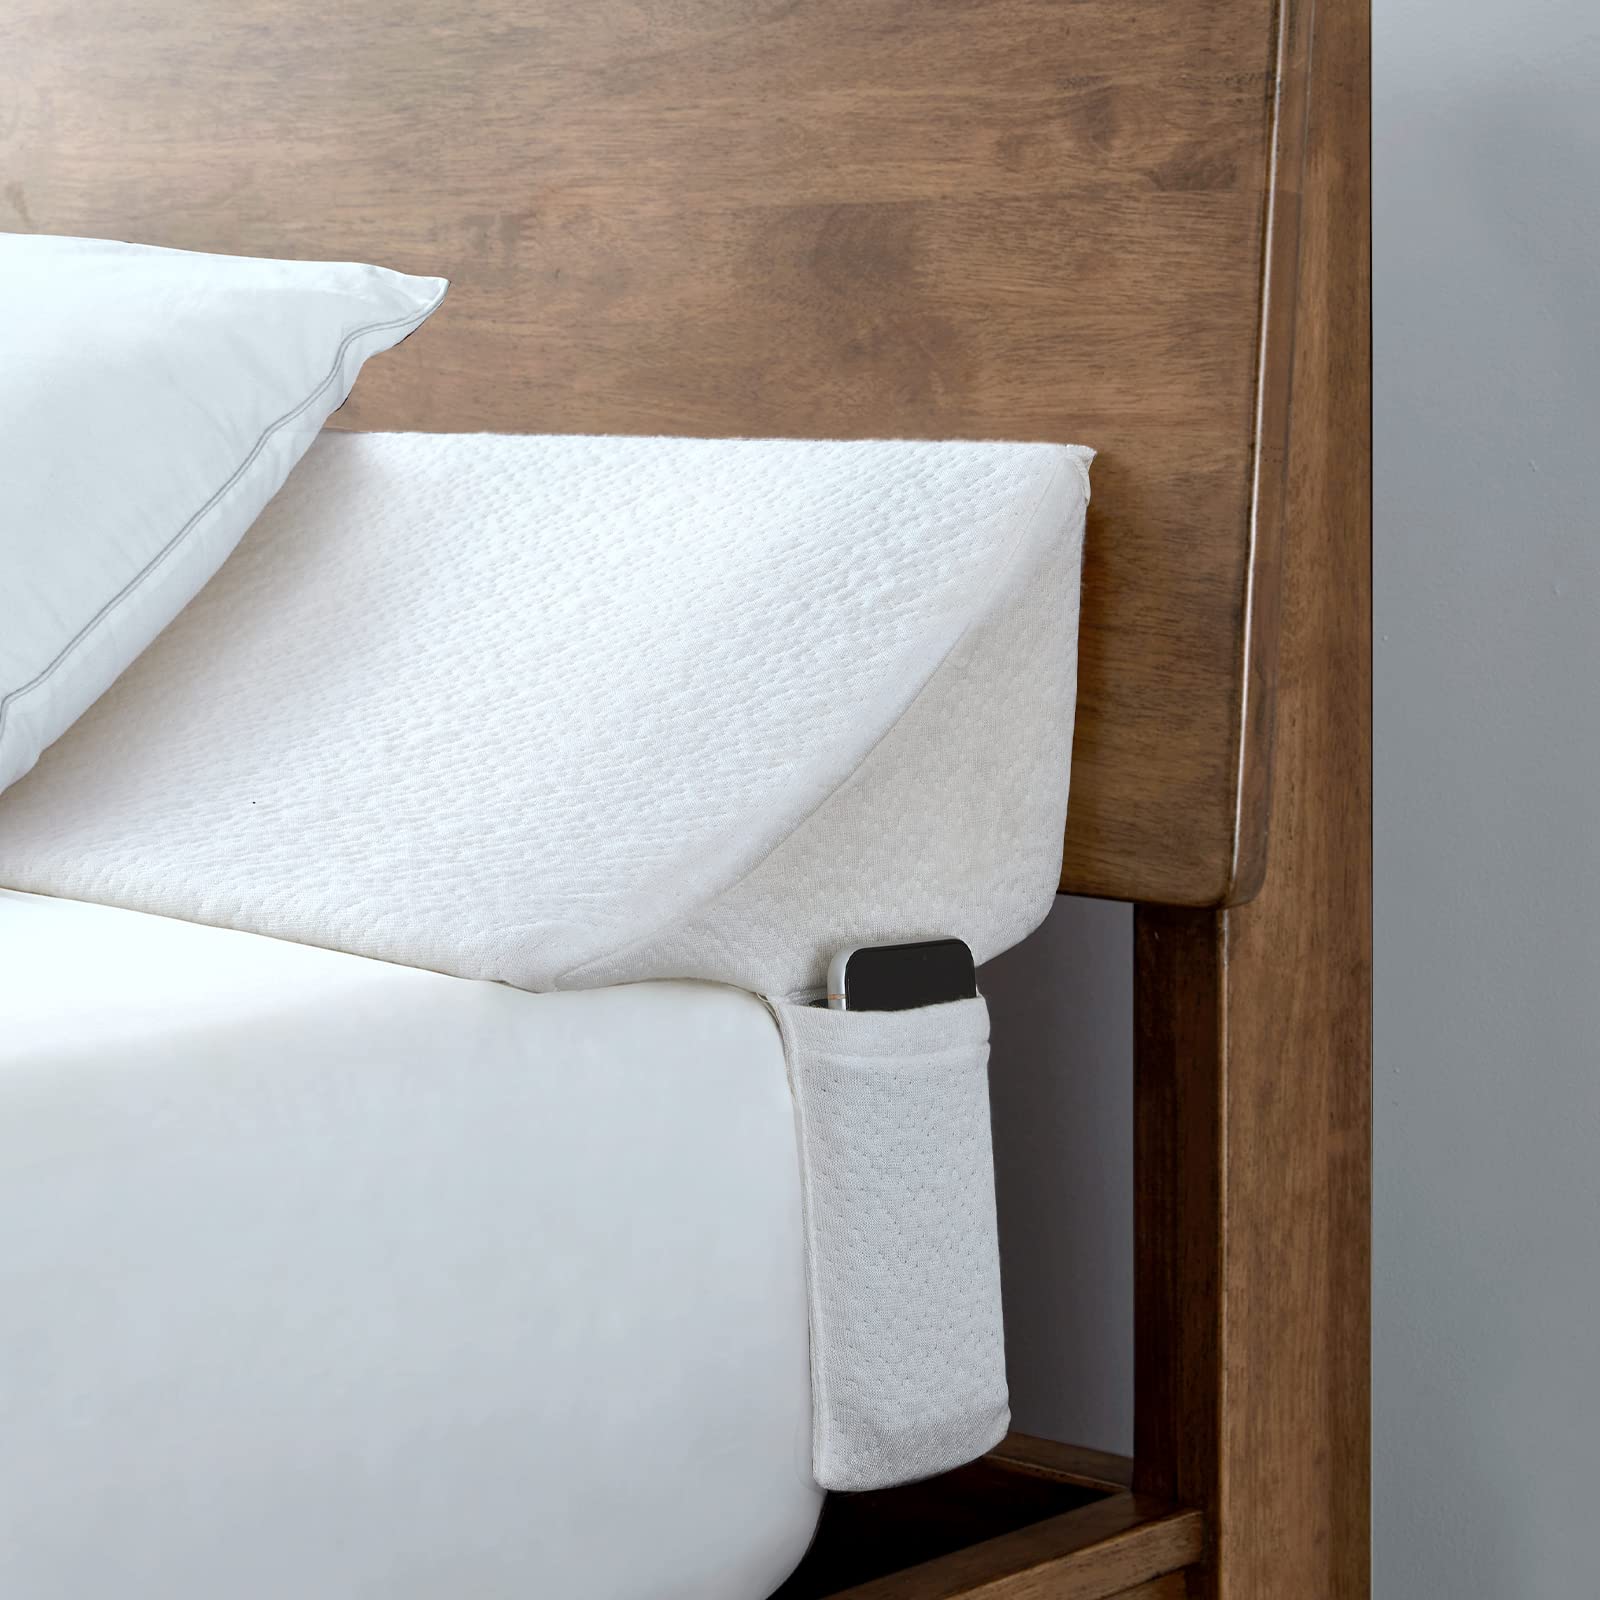 SLIGUY Queen Size Bed Wedge Pillow Headboard Pillow Mattress Wedge Bed Gap Filler Fill The Gap (0-7")  White 60"x10"x6"）$18.49 at Mskyo via Amazon